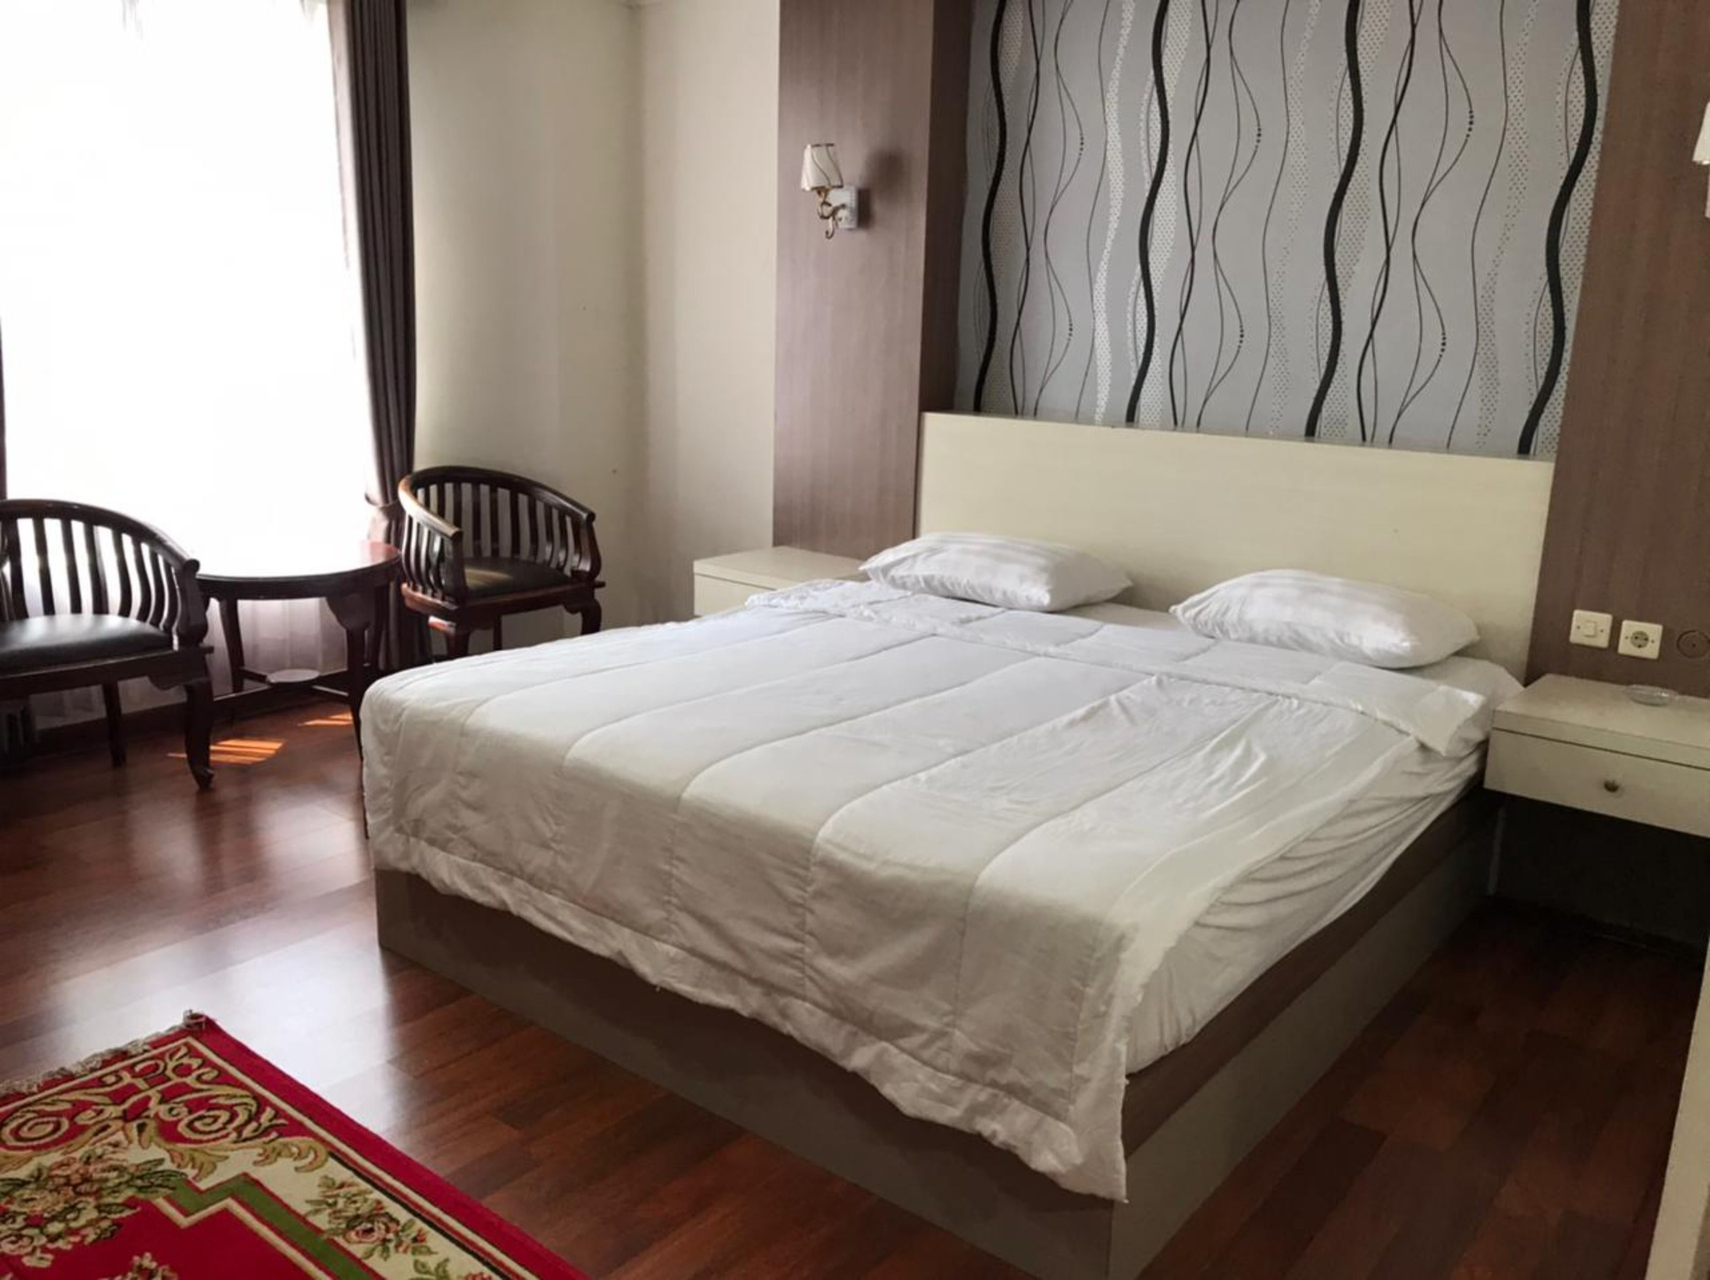 Bedroom 1, Grand Balqis Akasia Hotel, Surabaya